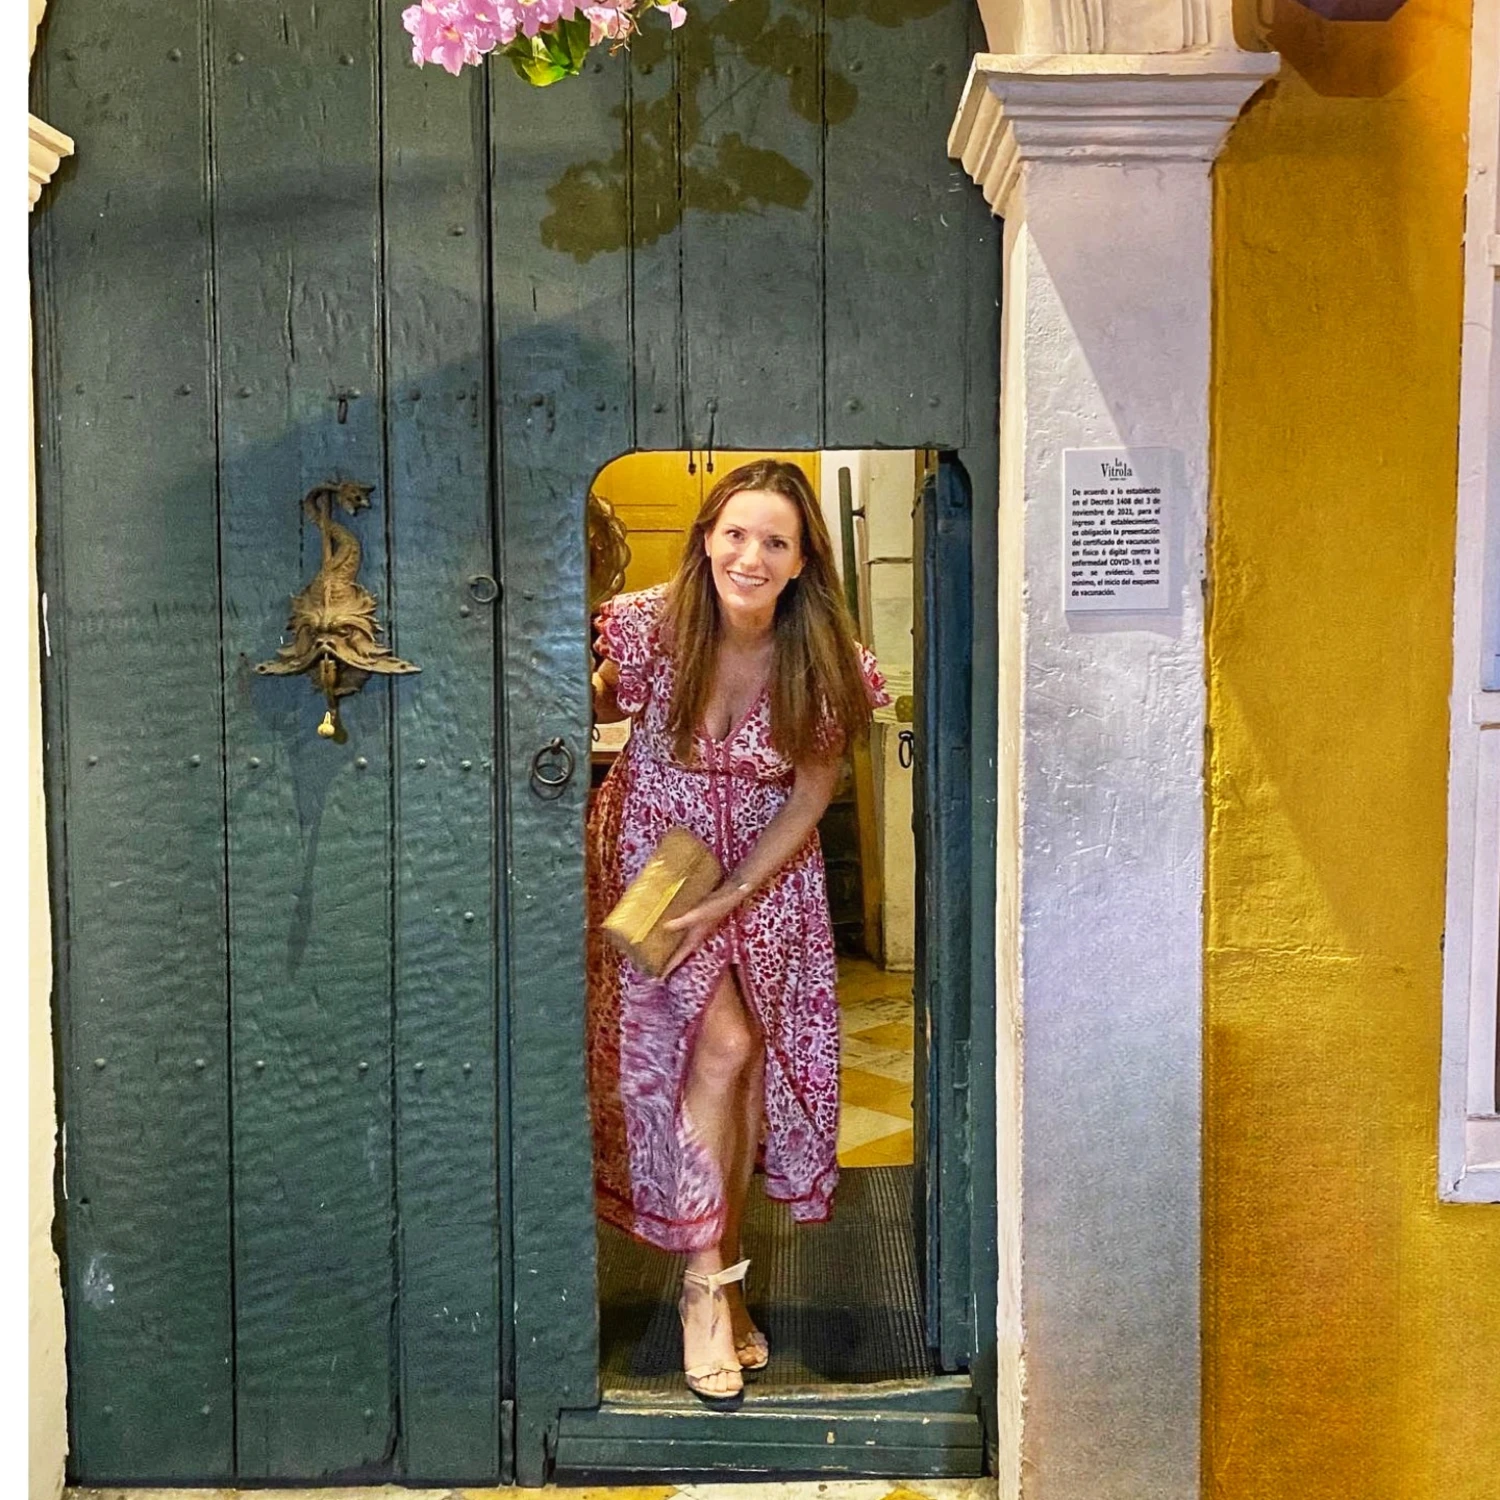 Travel advisor posing in a green doorway